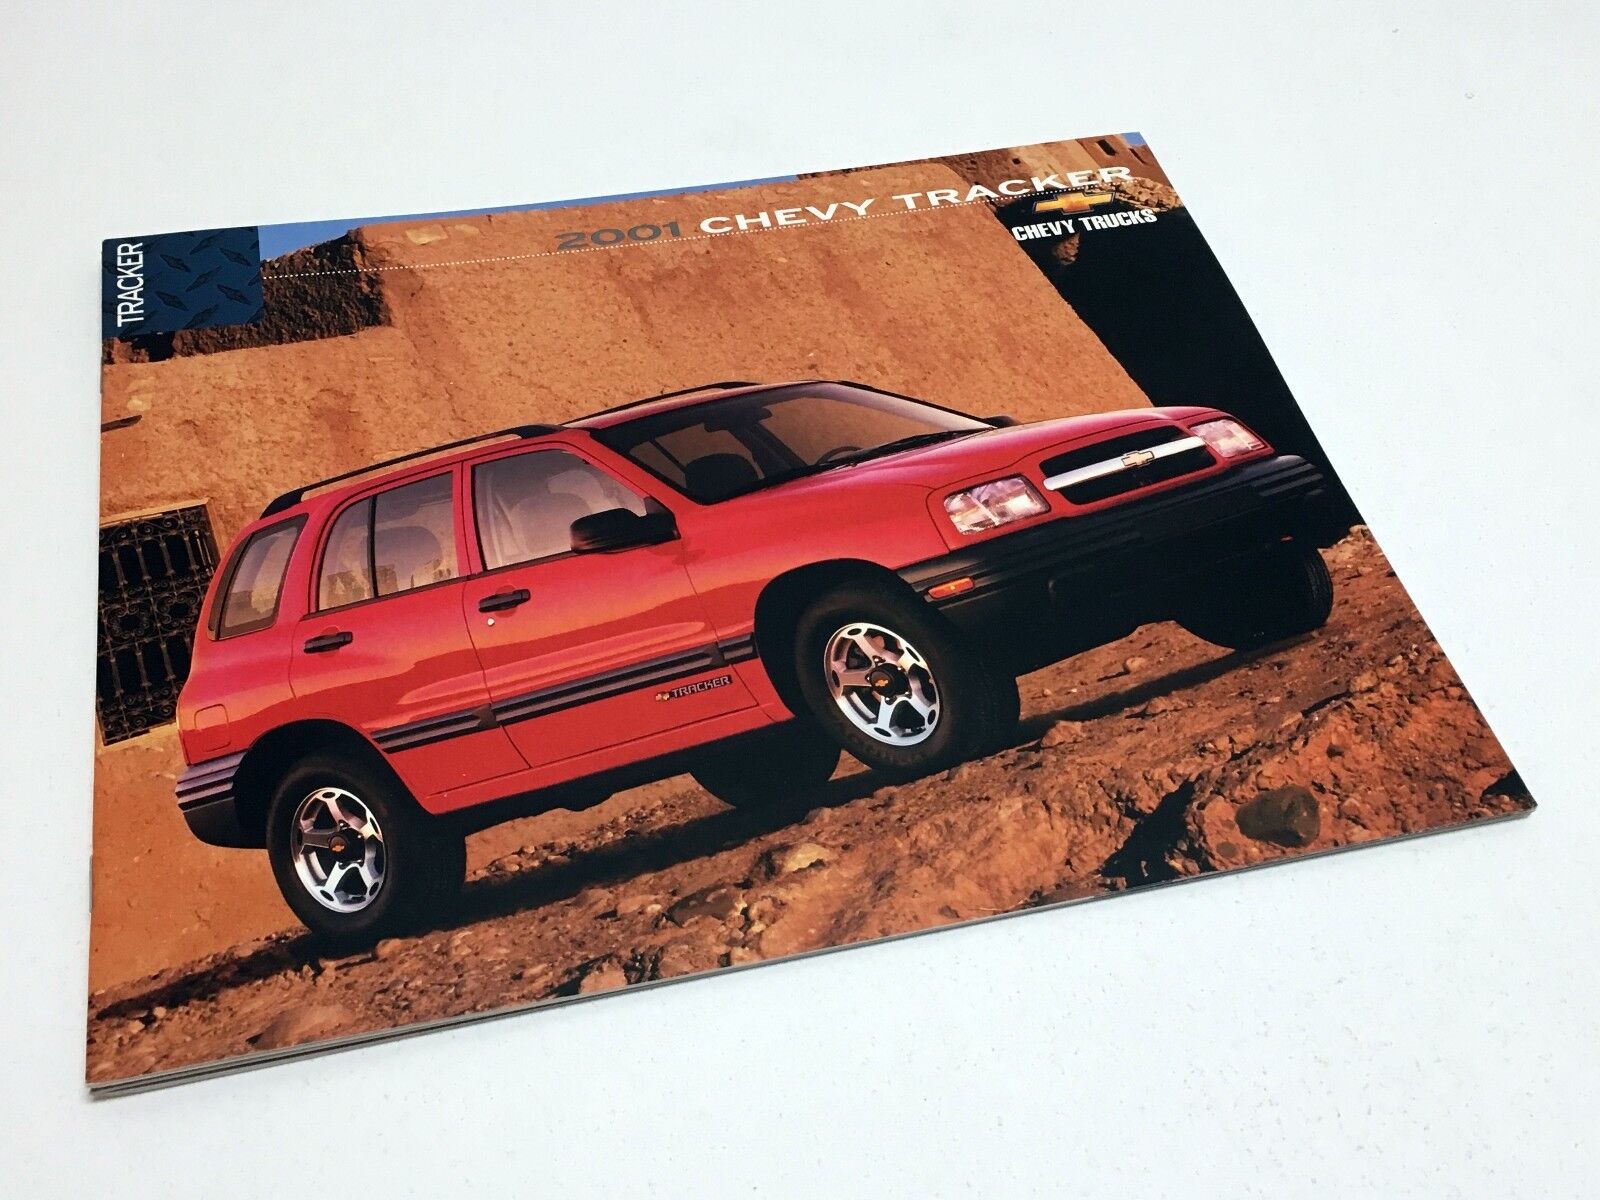 2001 Chevrolet Tracker Brochure | eBay